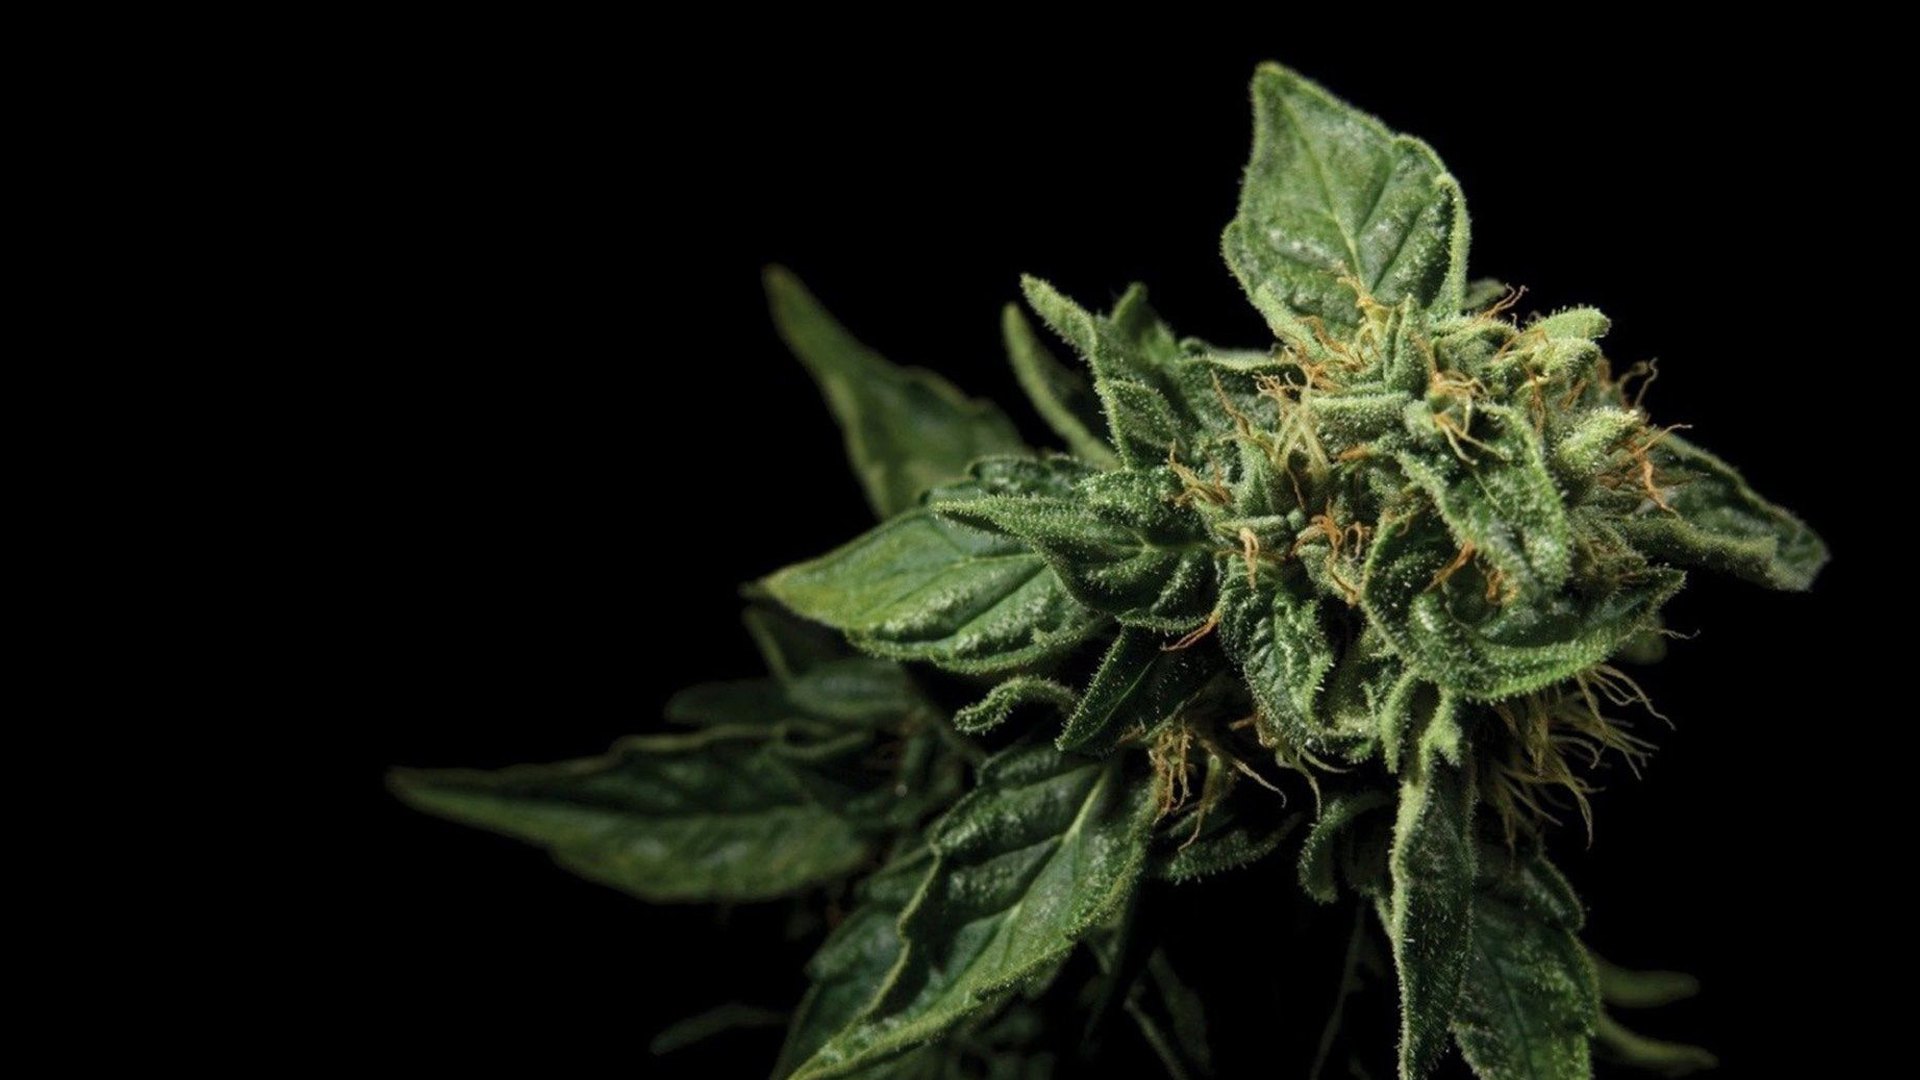 Cannabis leaves on dark background.